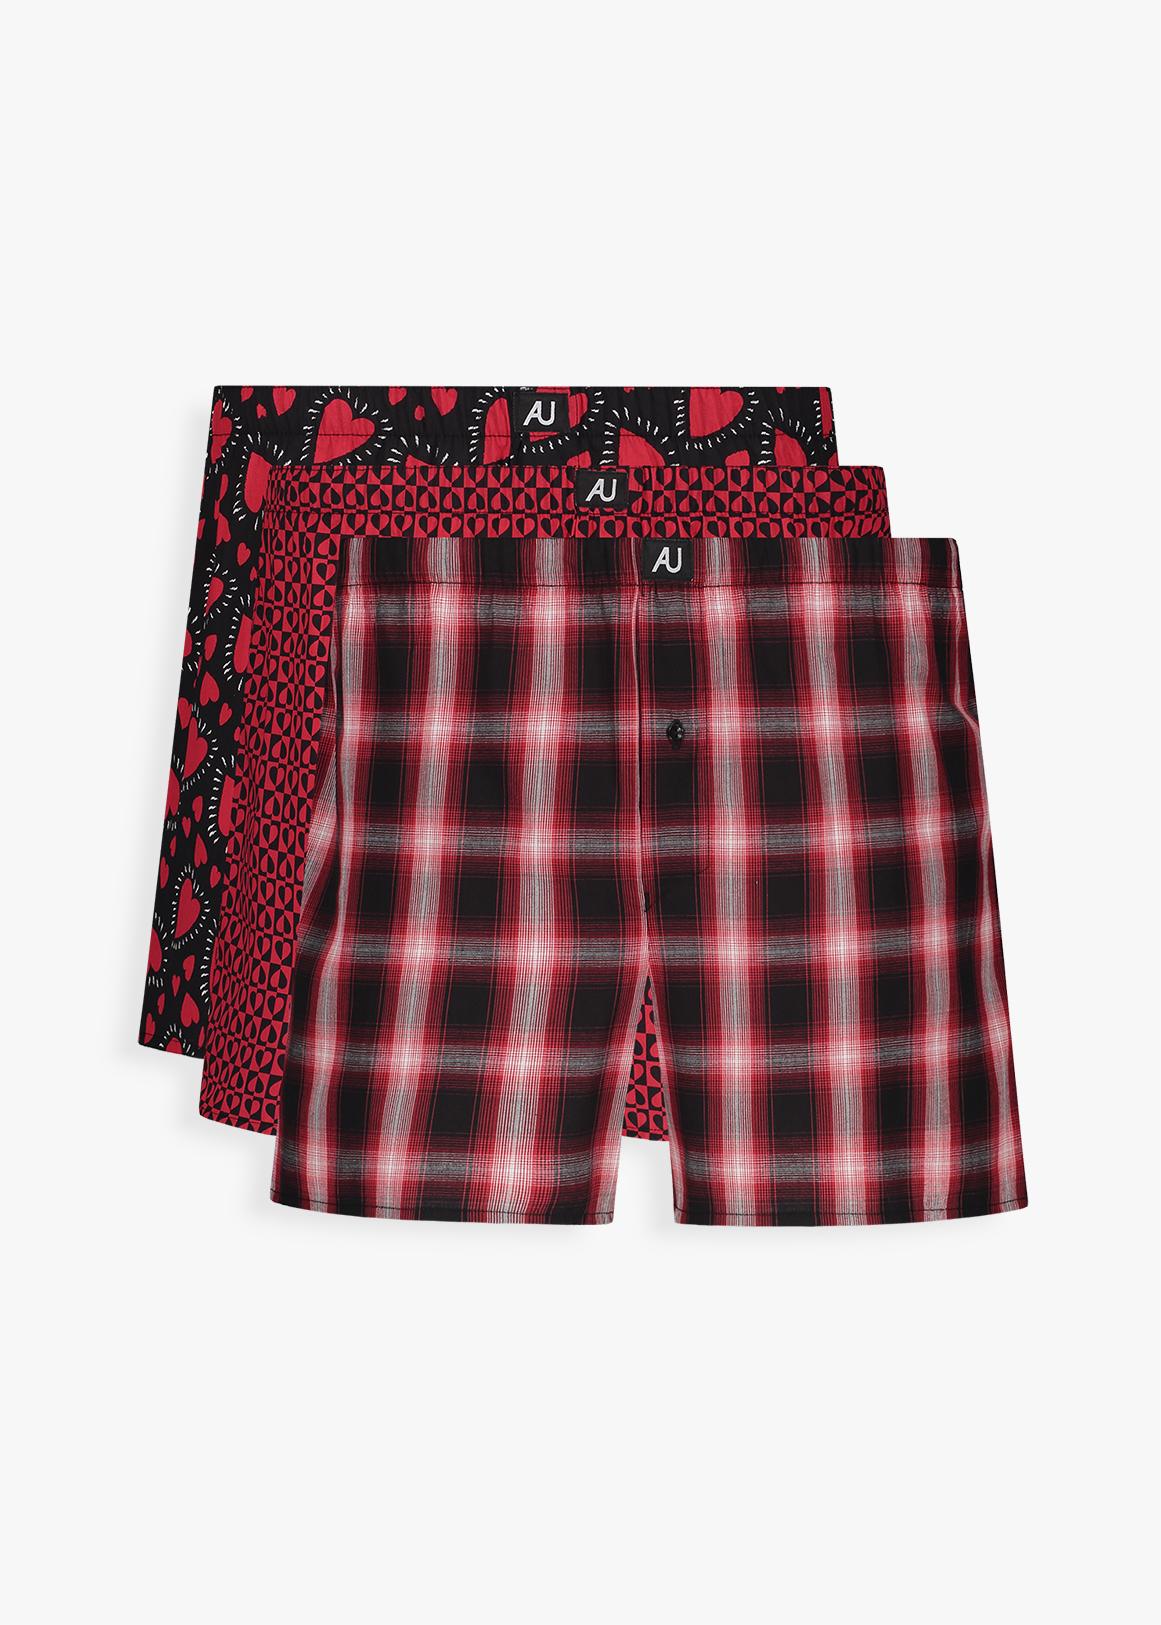 More Than Bacon - Unisex Cotton Boxer Shorts Underwear